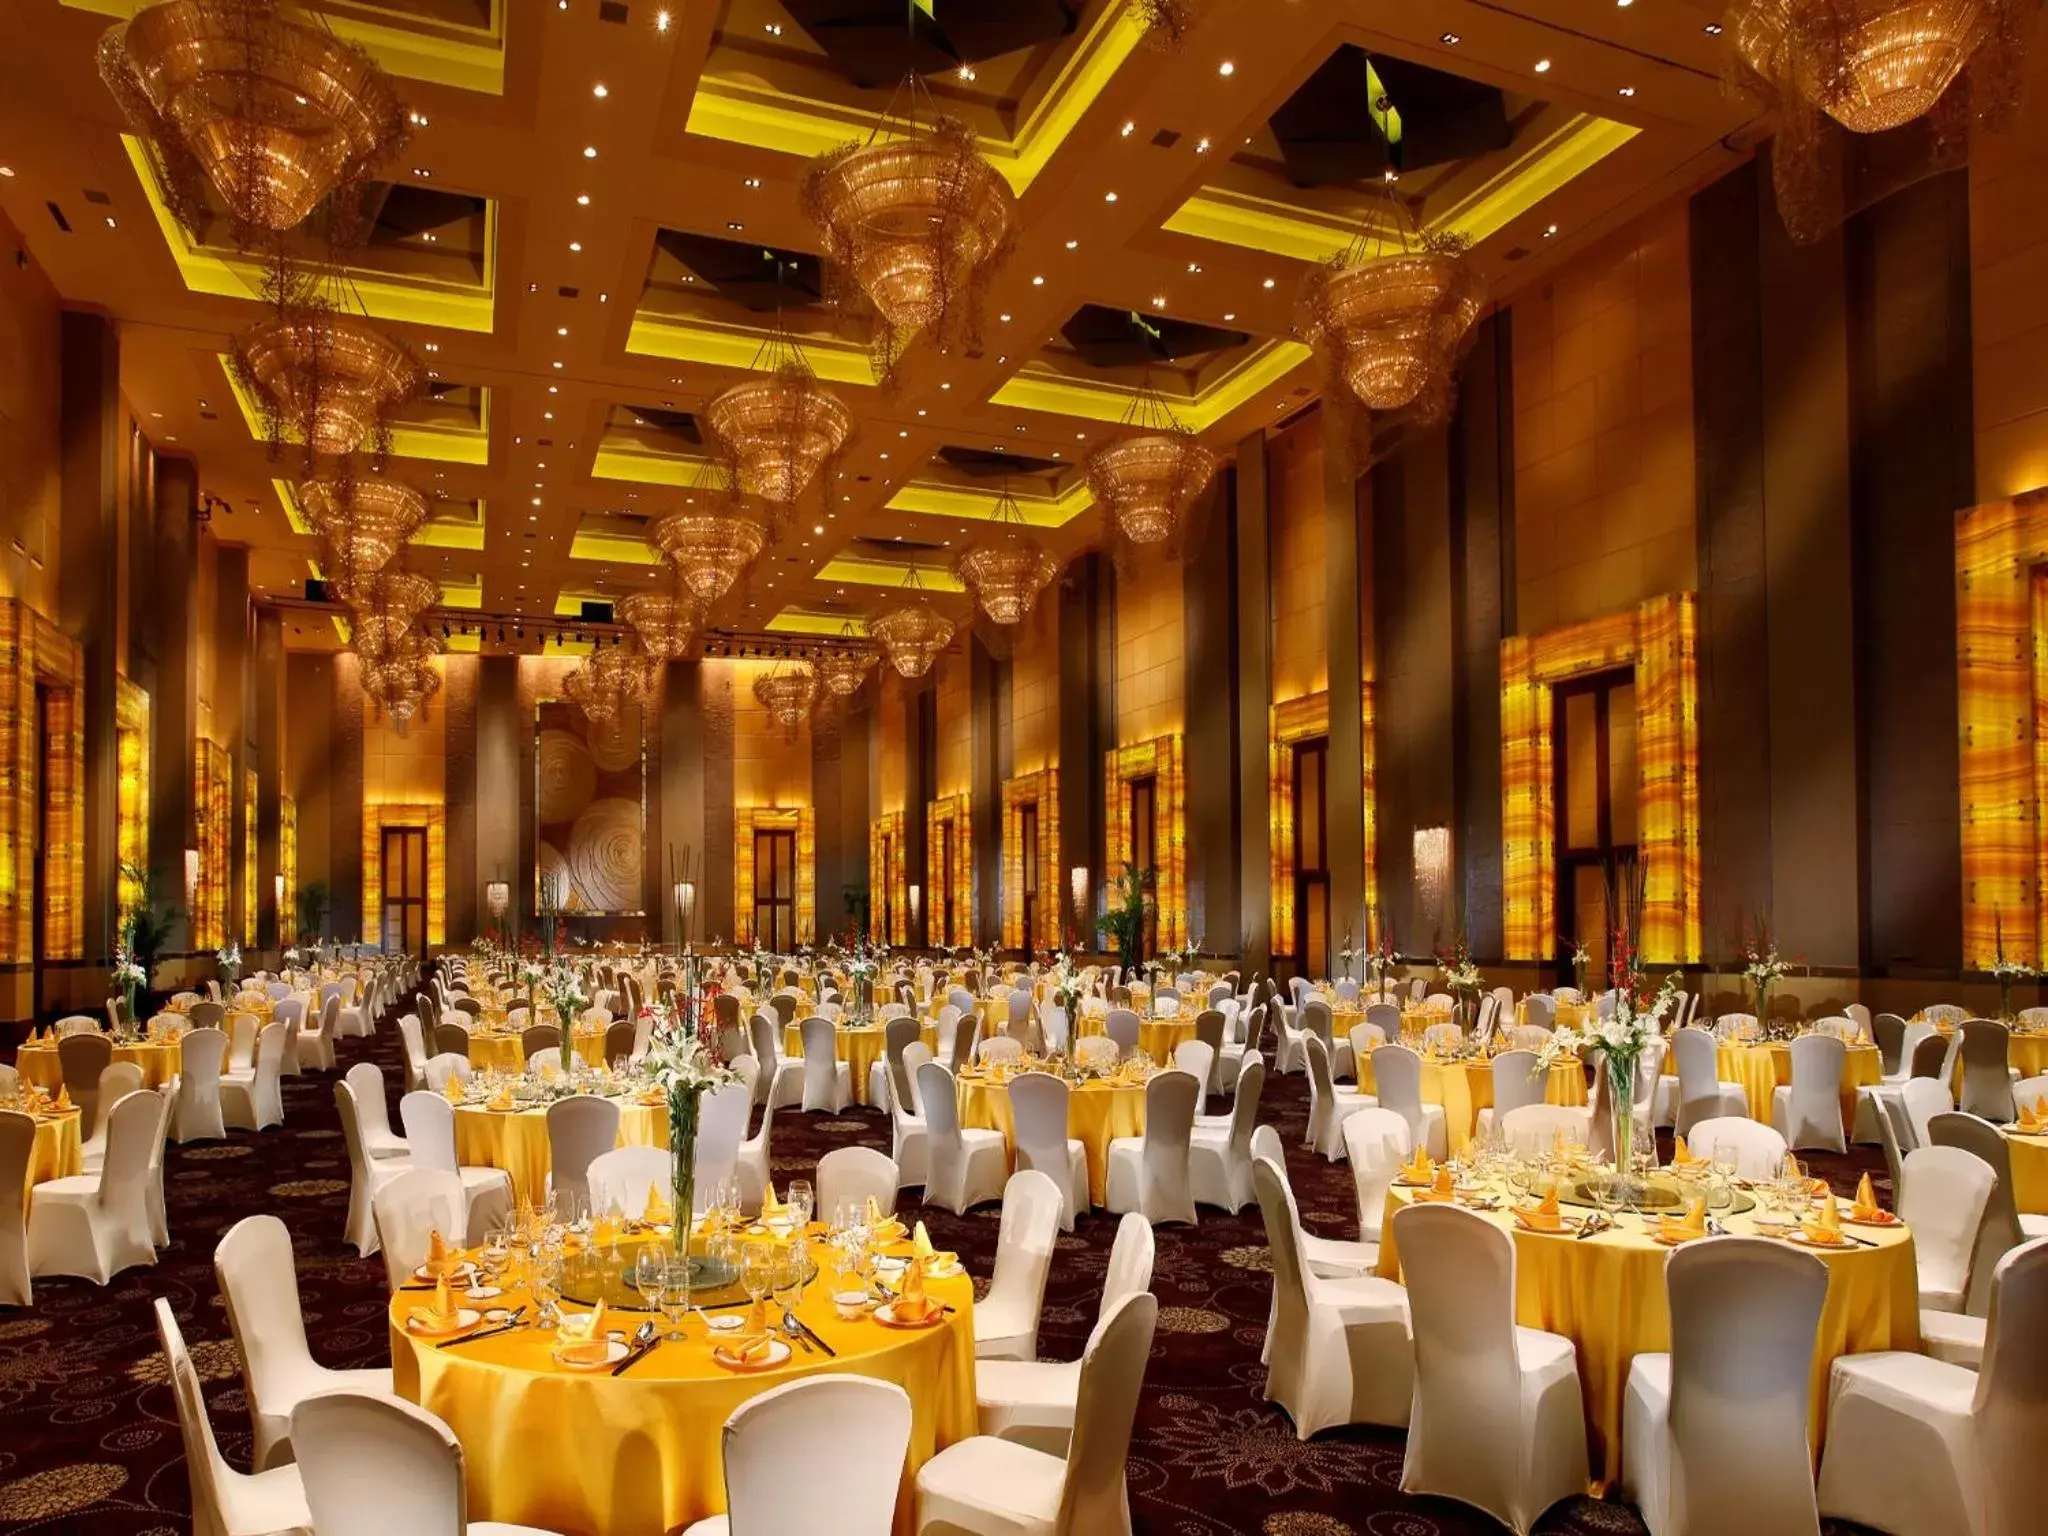 Banquet/Function facilities, Banquet Facilities in Kempinski Hotel Suzhou